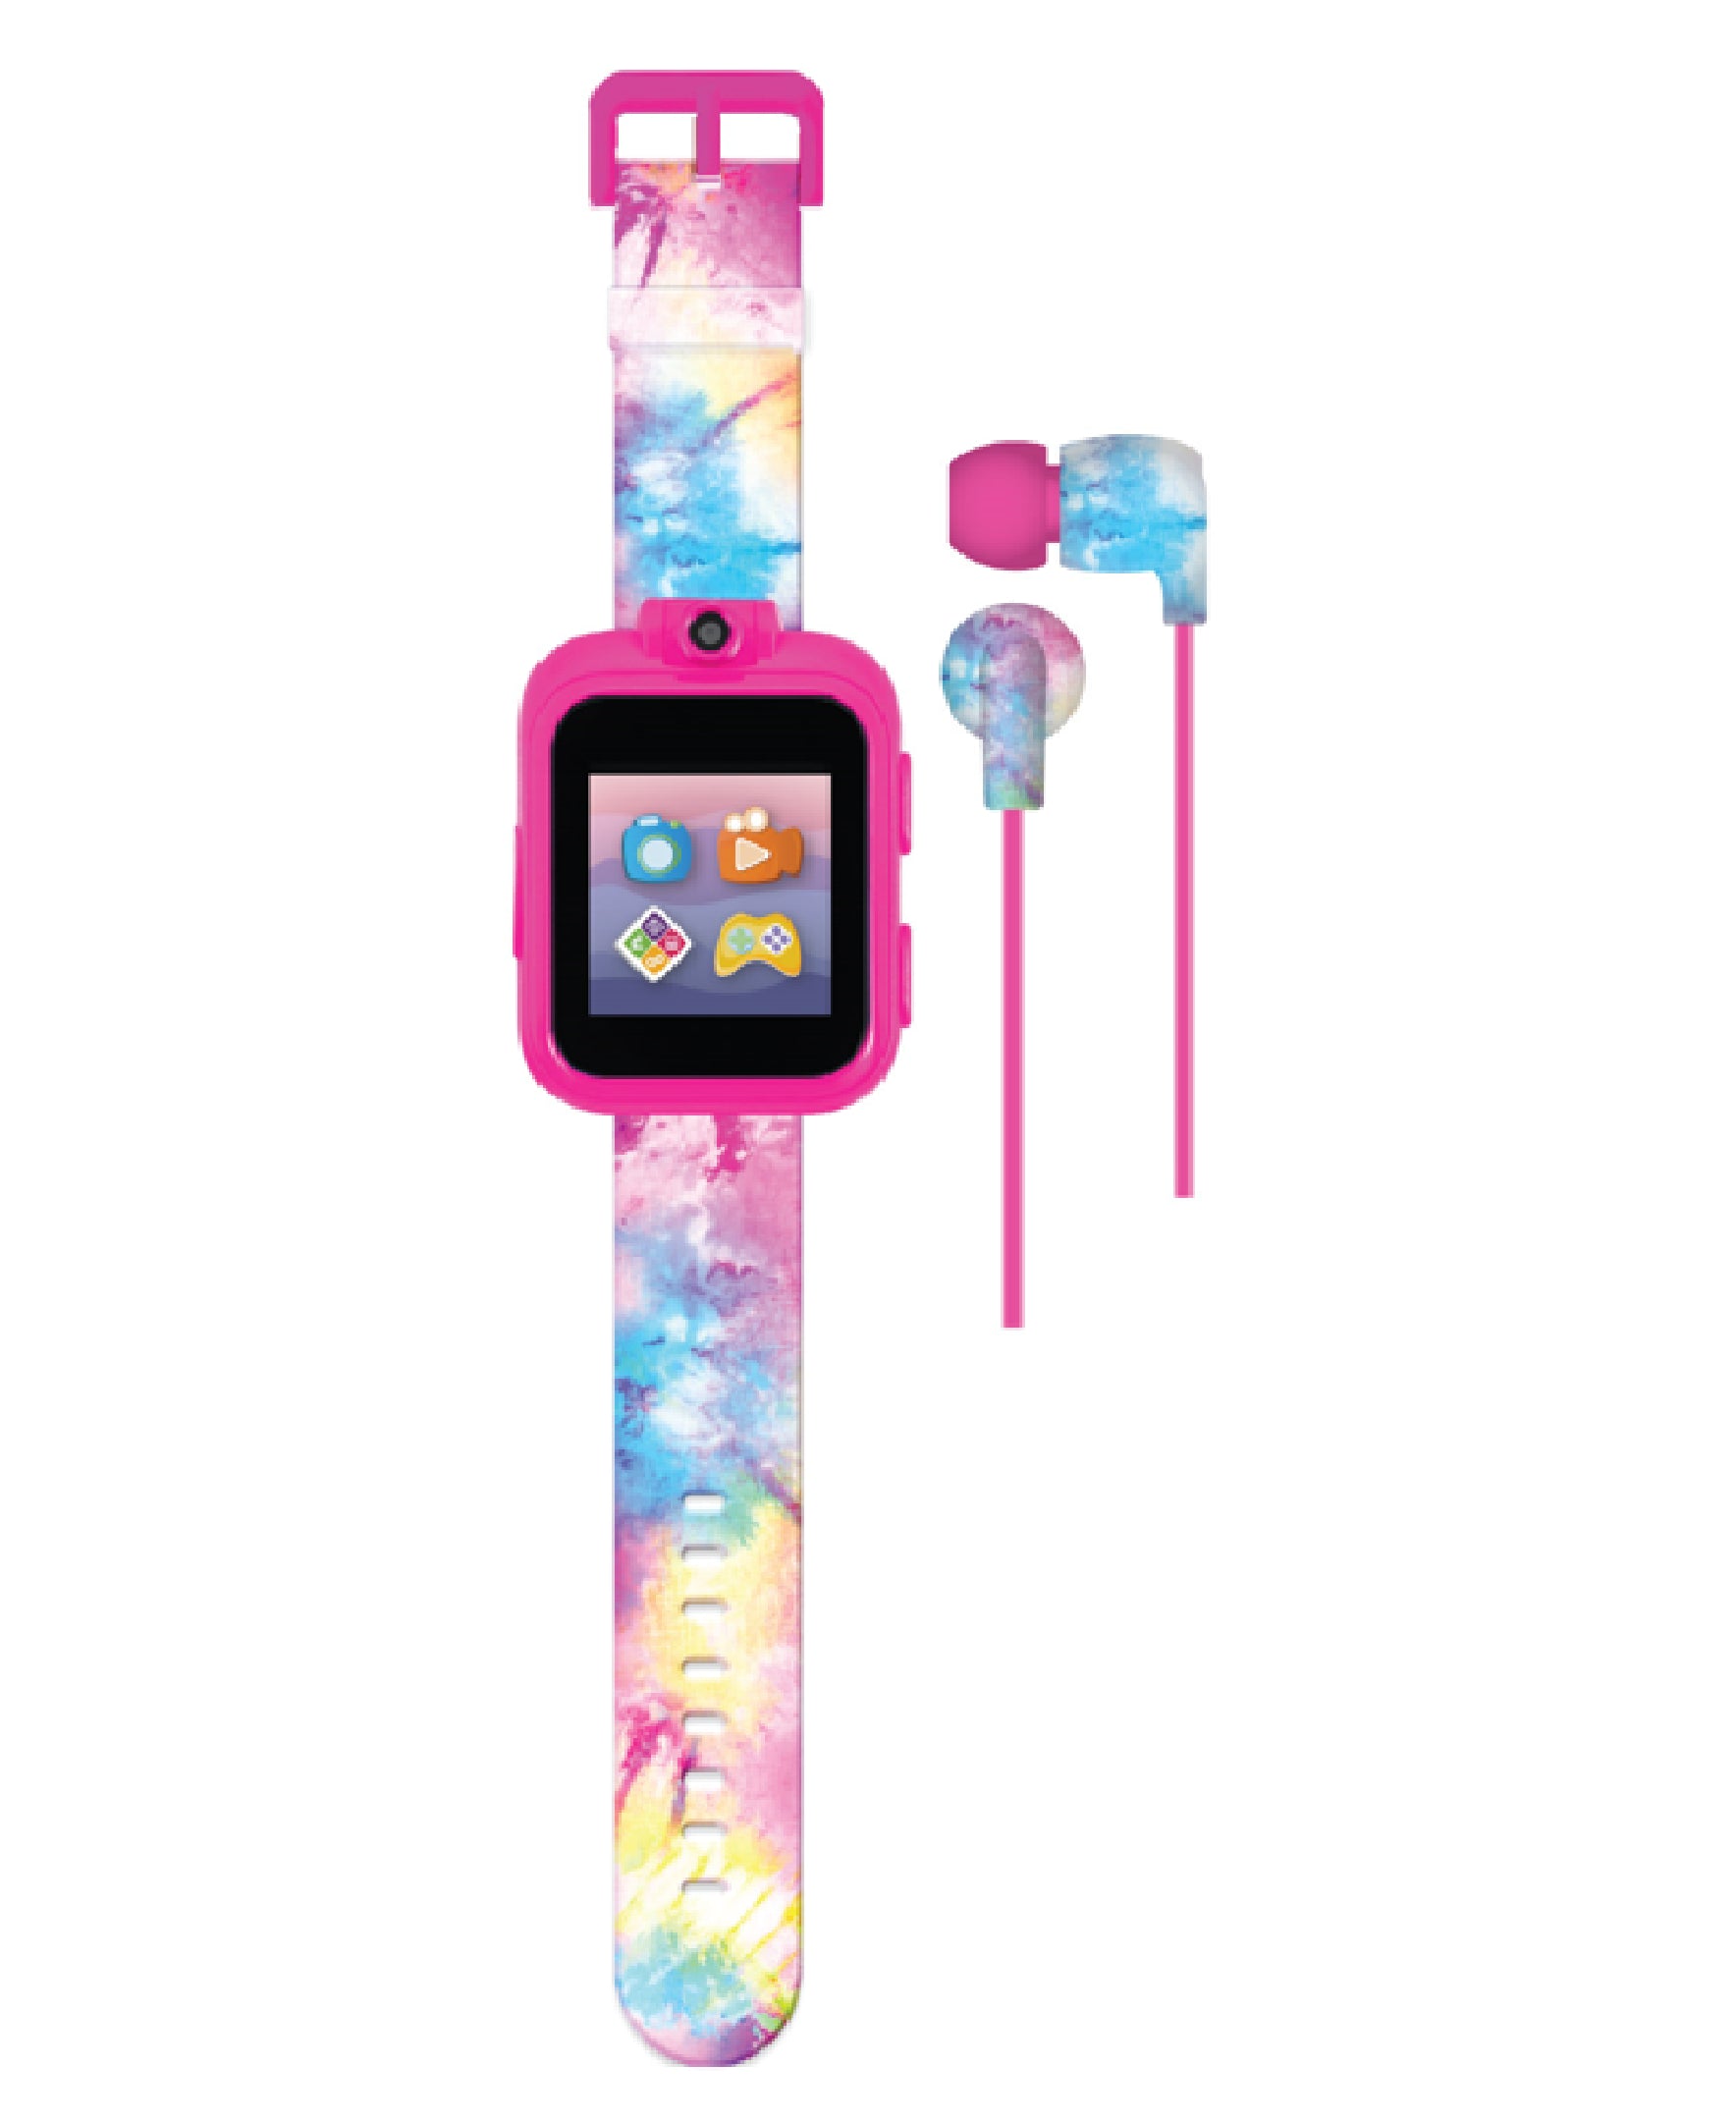 Playzoom 2 Kids Smartwatch & Earbuds Set: Pink, Blue, Yellow Tie Dye